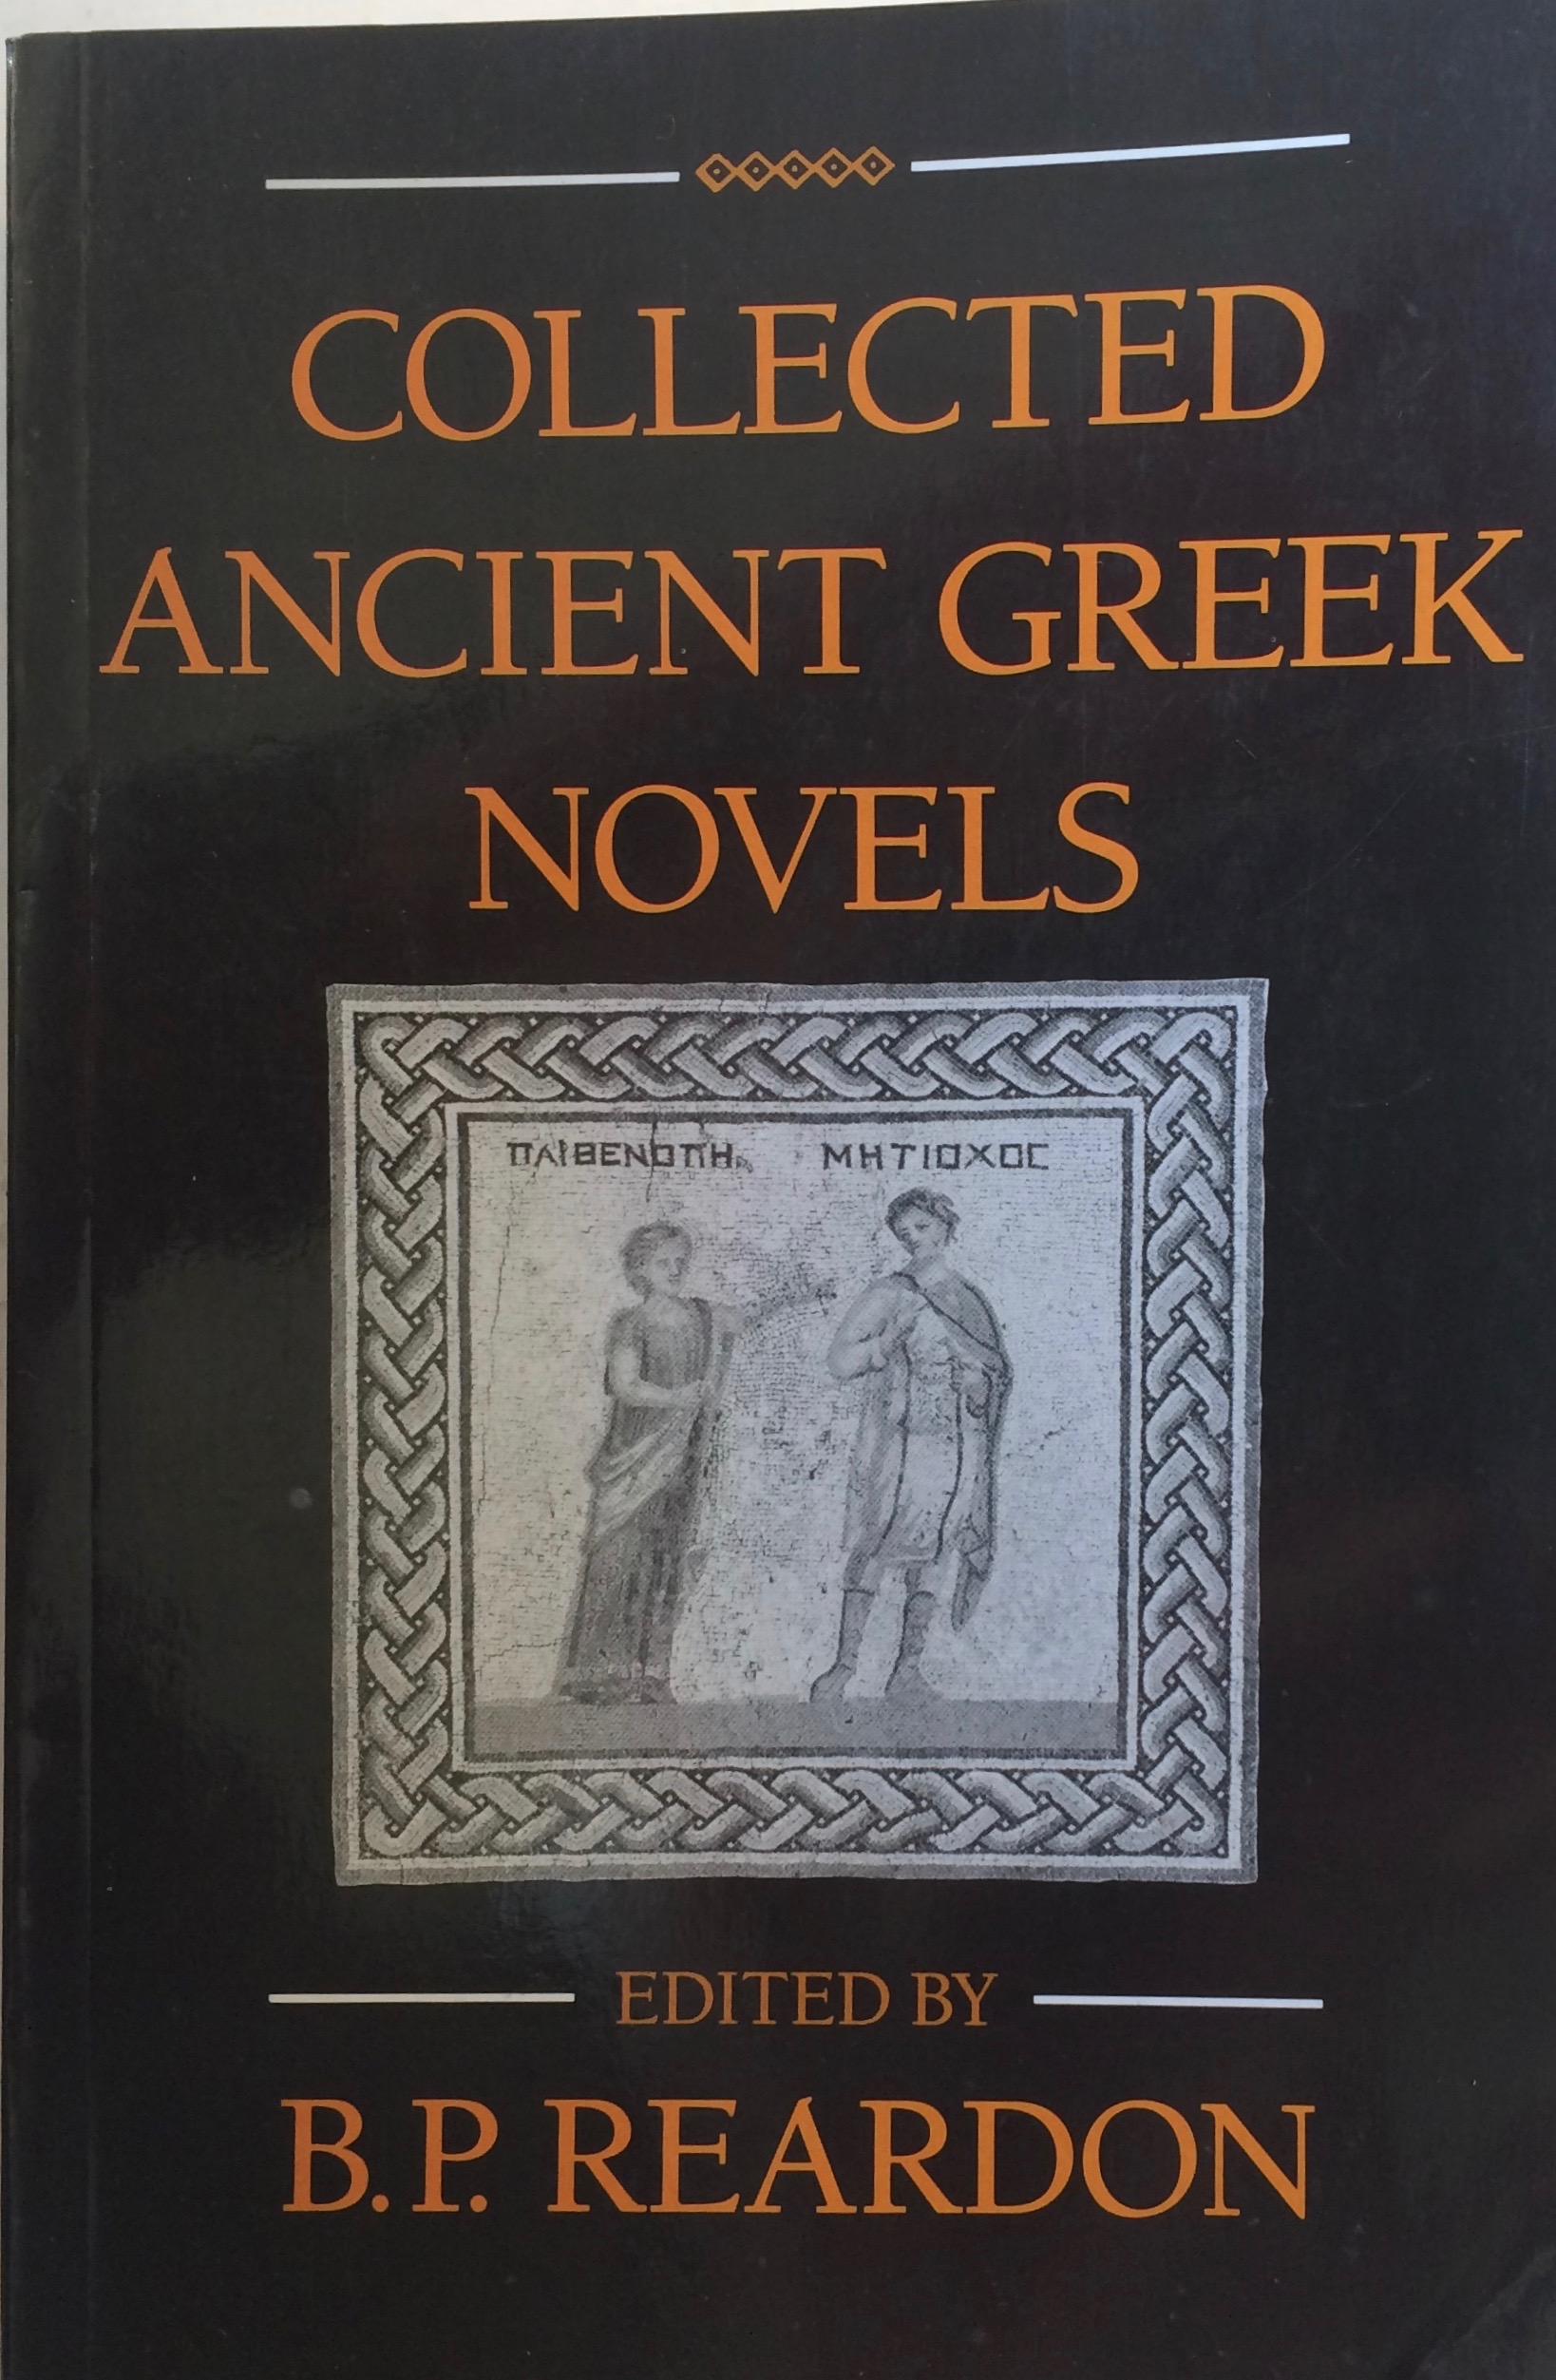 Collected Ancient Greek Novels. - REARDON, B.P. (Ed.)